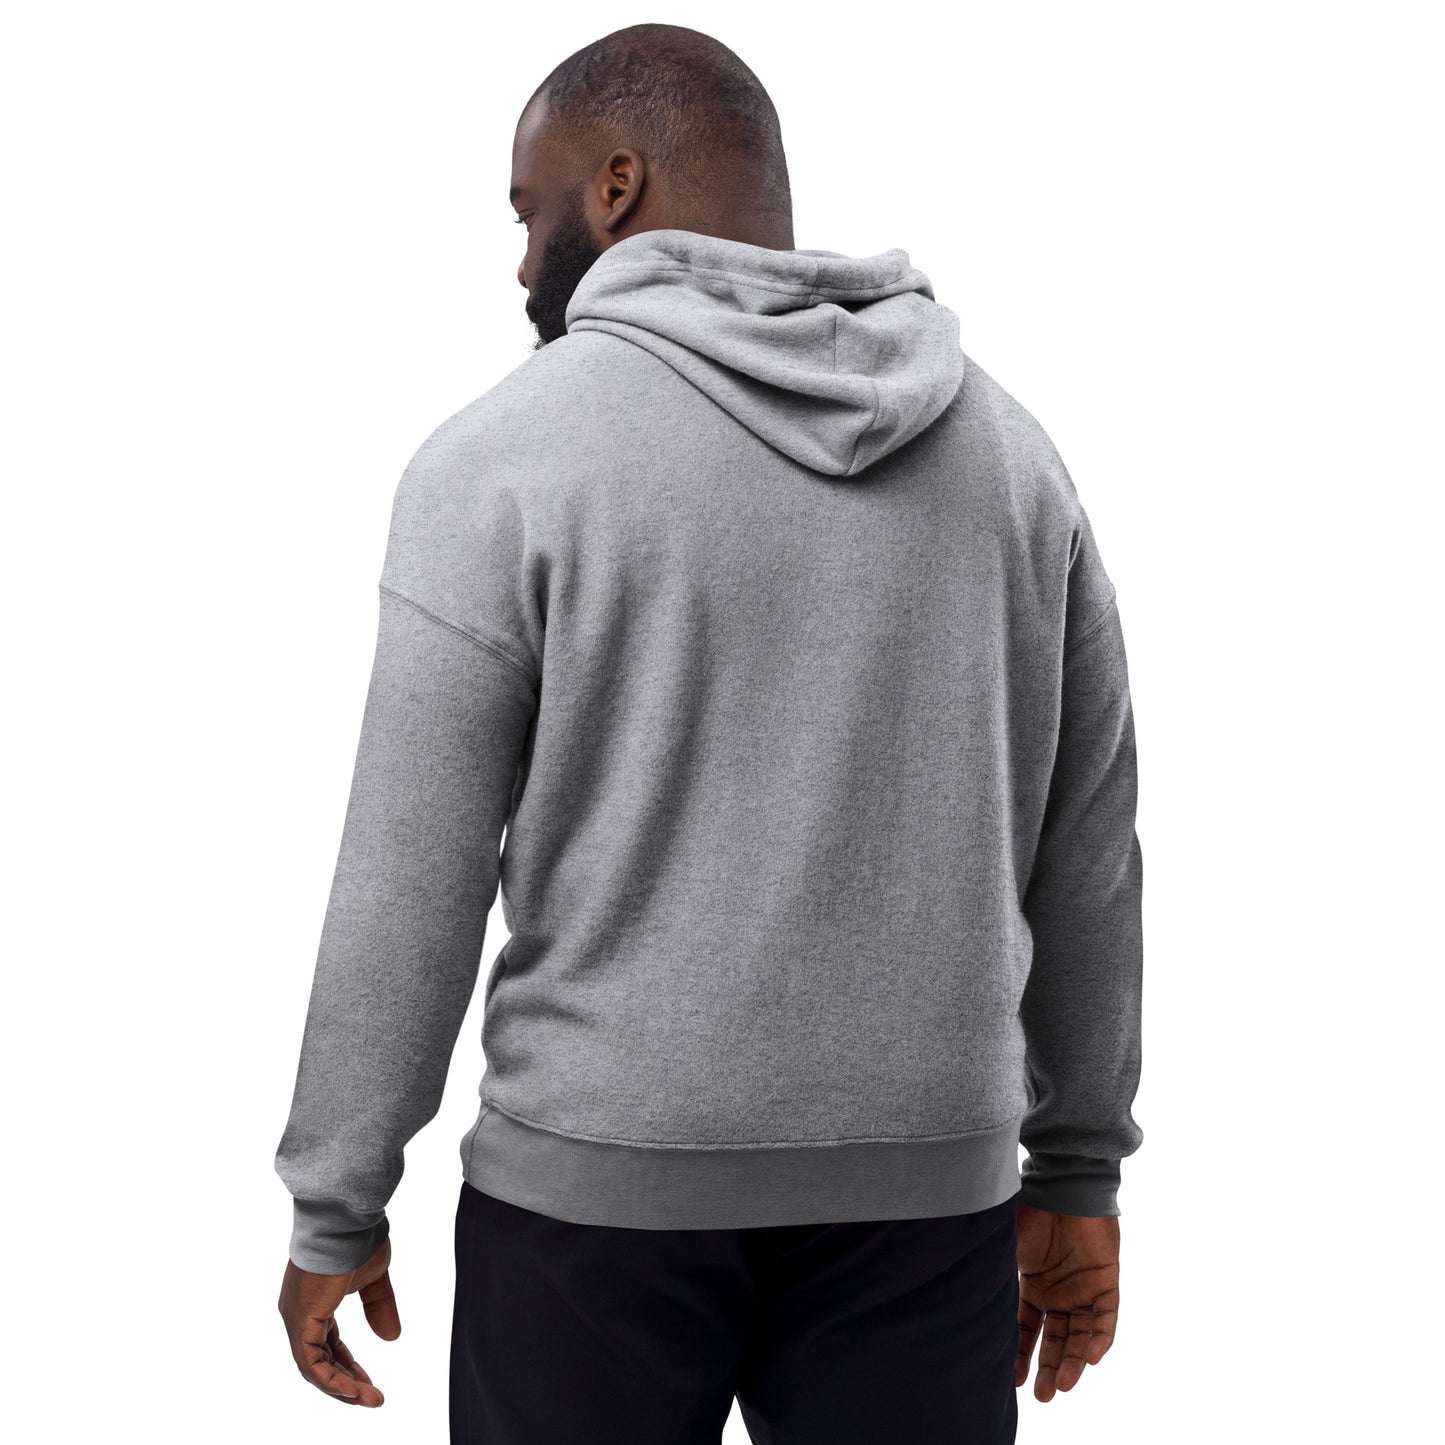 1black Unisex sueded fleece hoodie